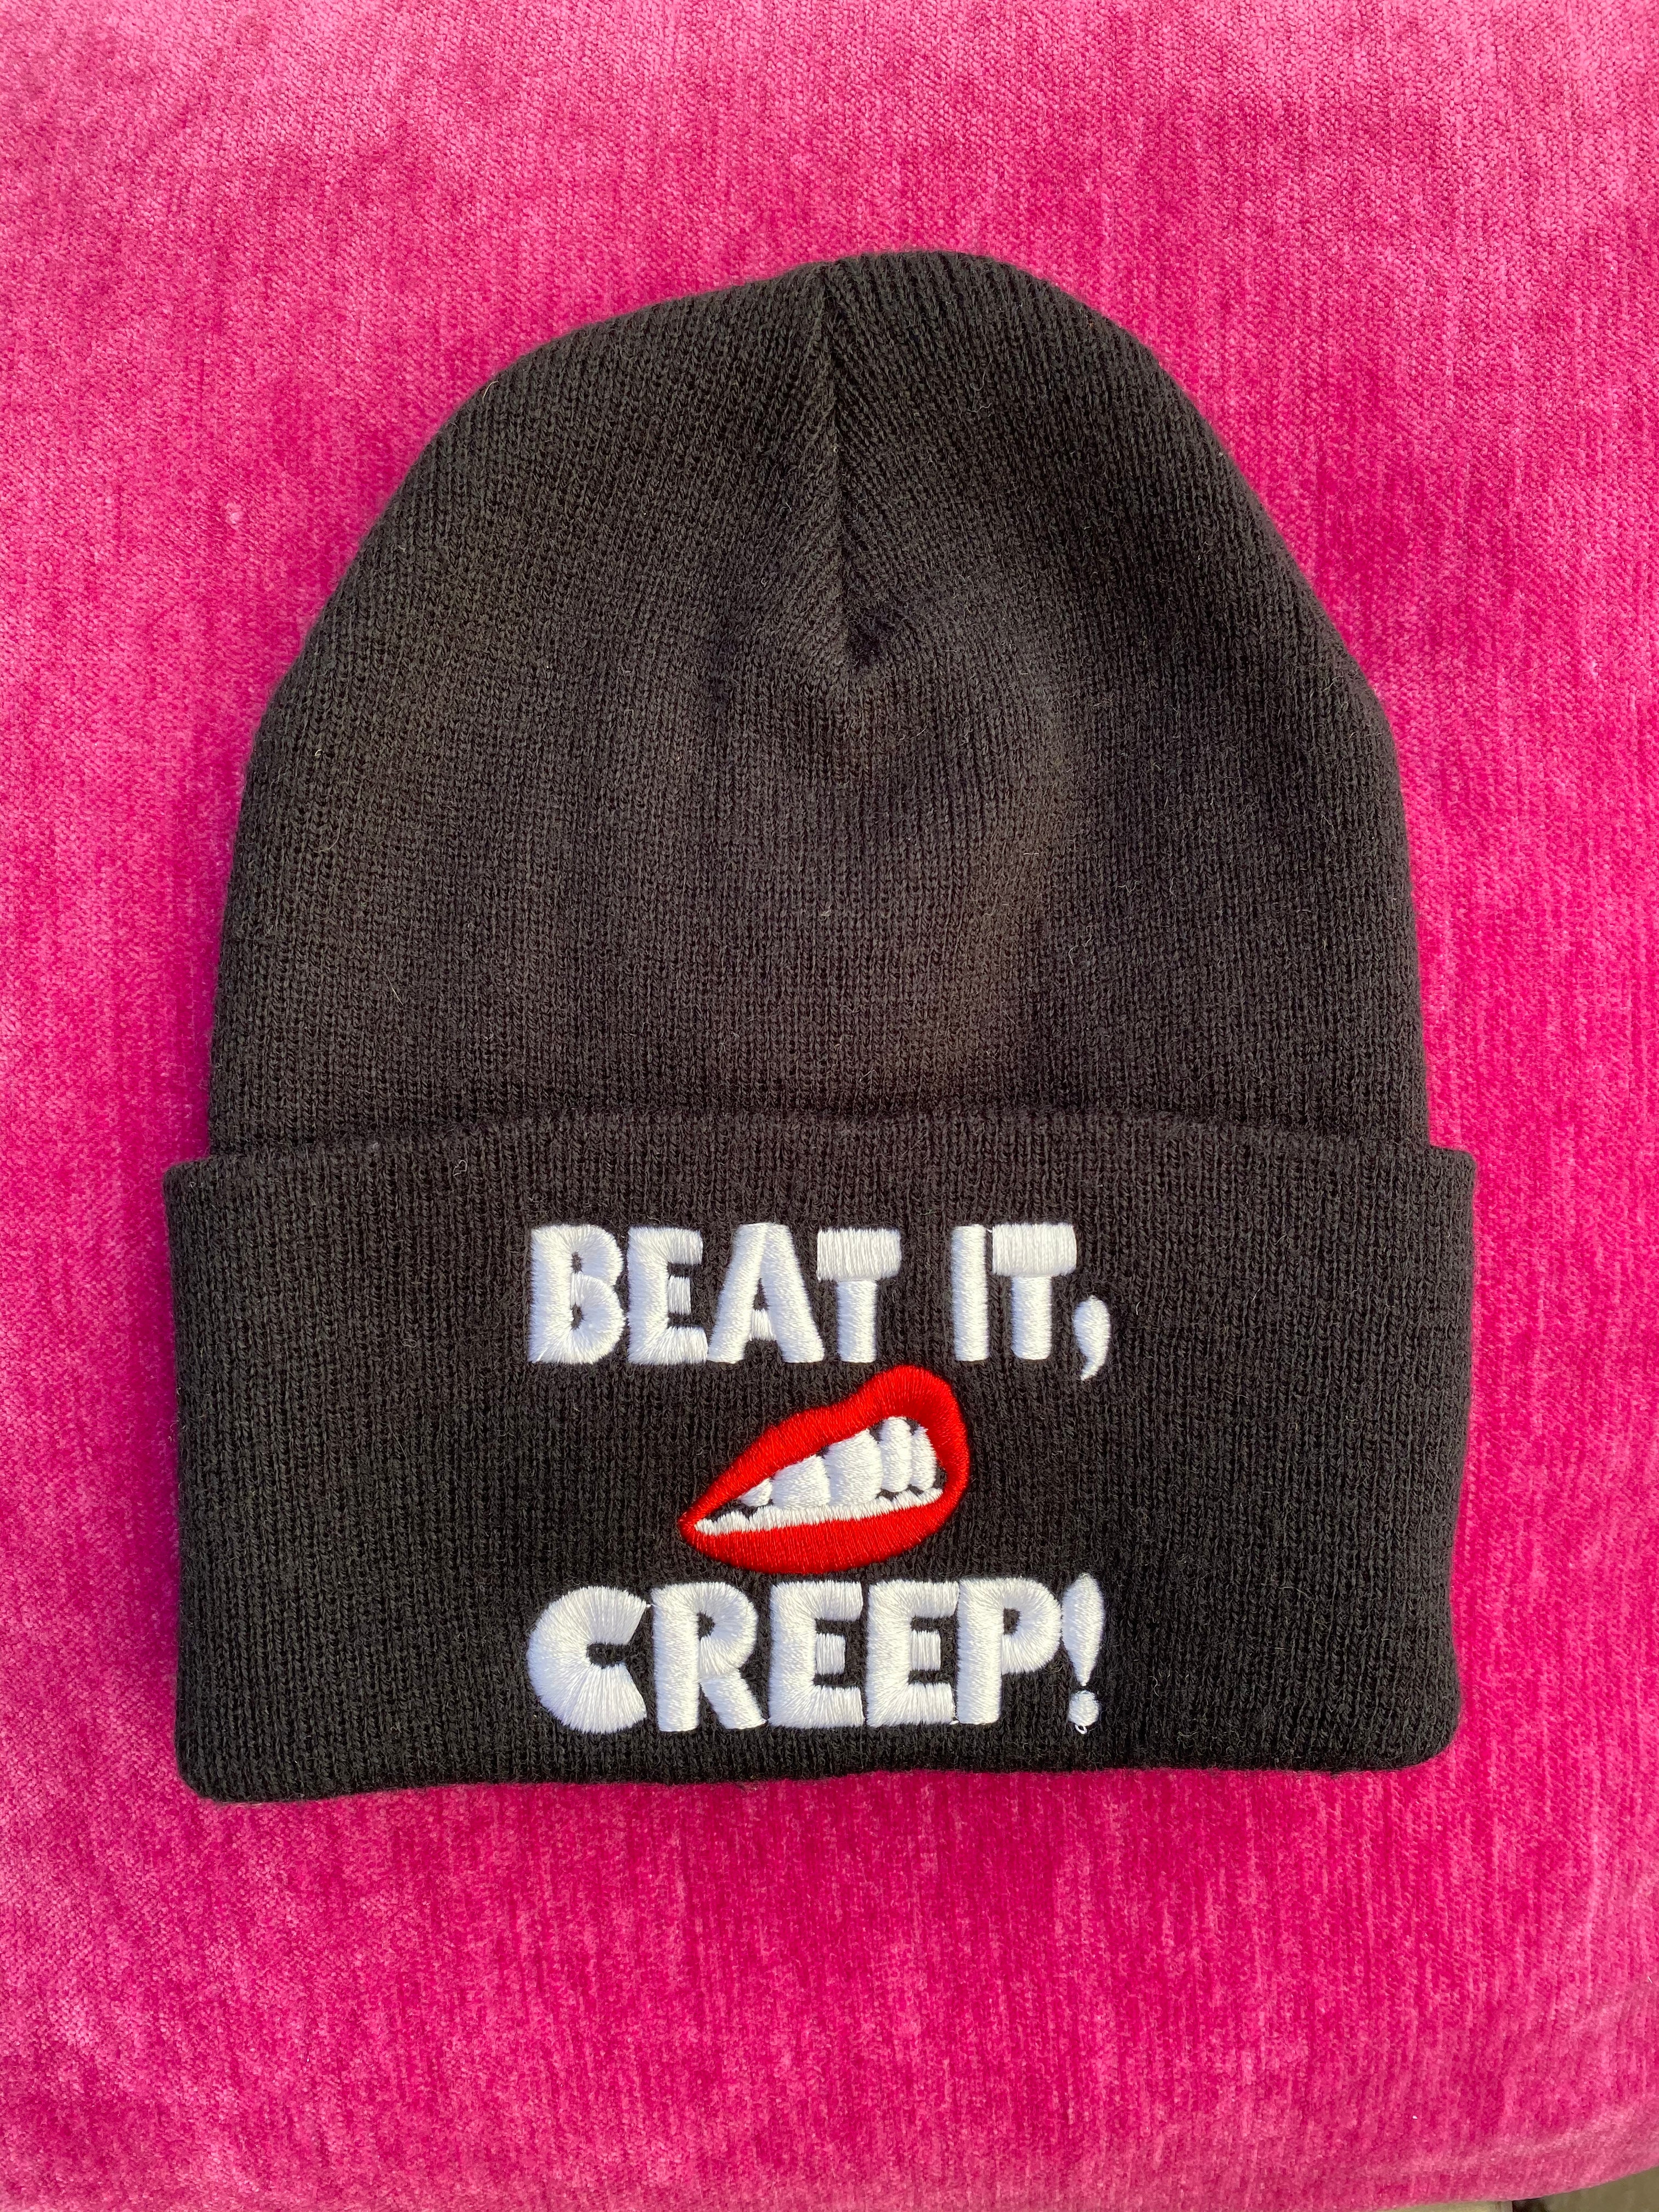 Beat It Creep beanie hat